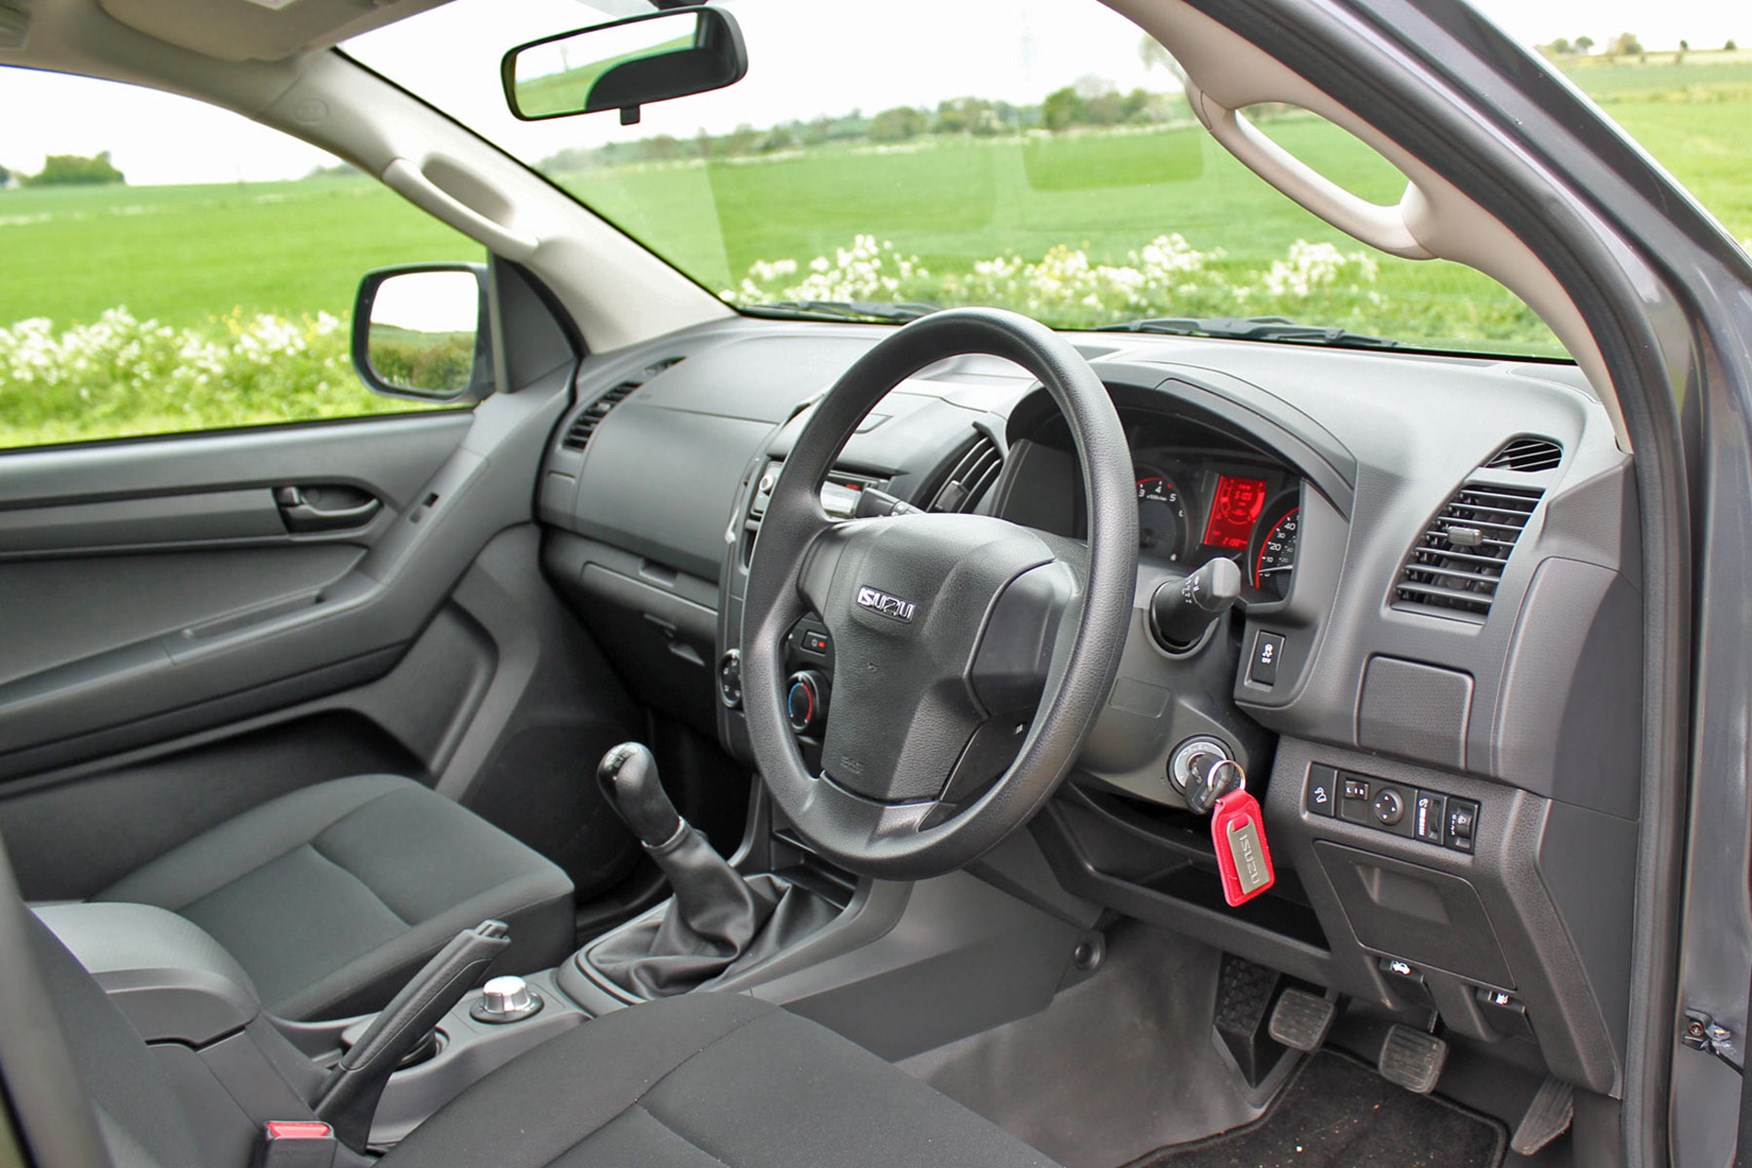 Isuzu D-Max Utility 1.9 review - cab interior